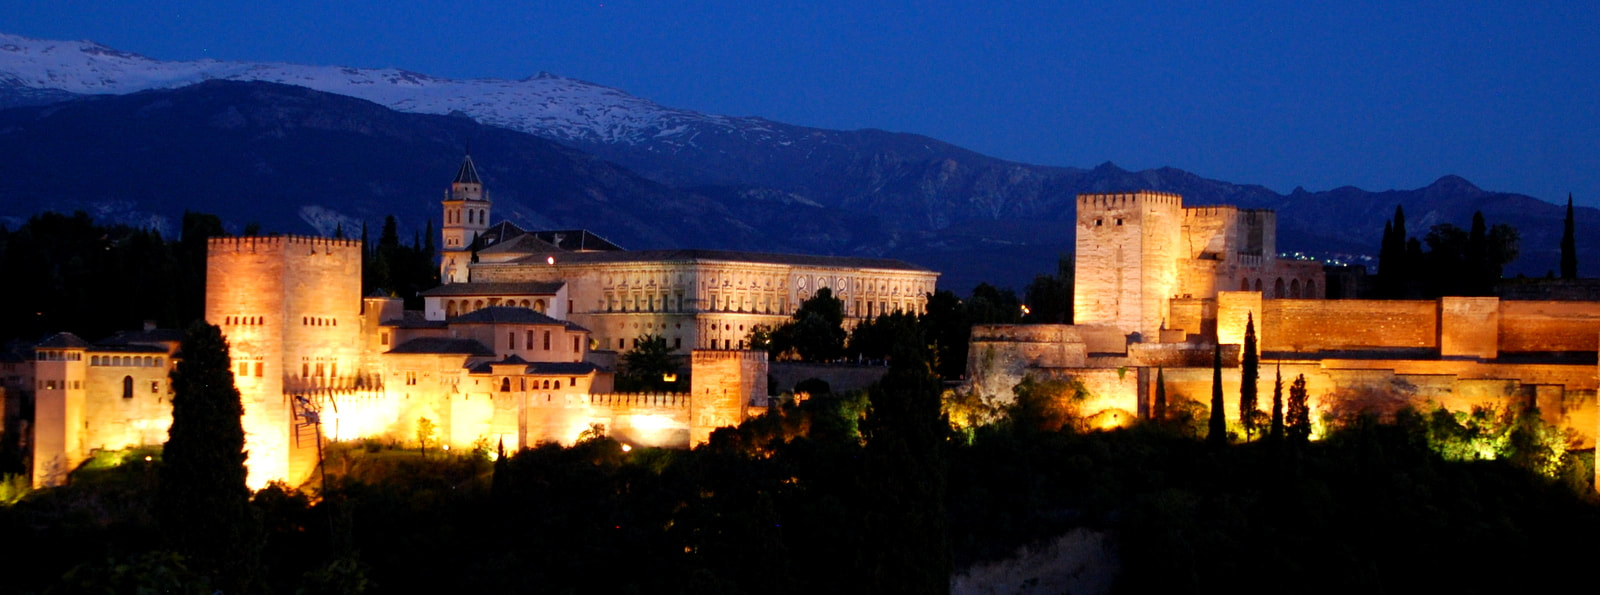 Alhambra palace at night in Granada 